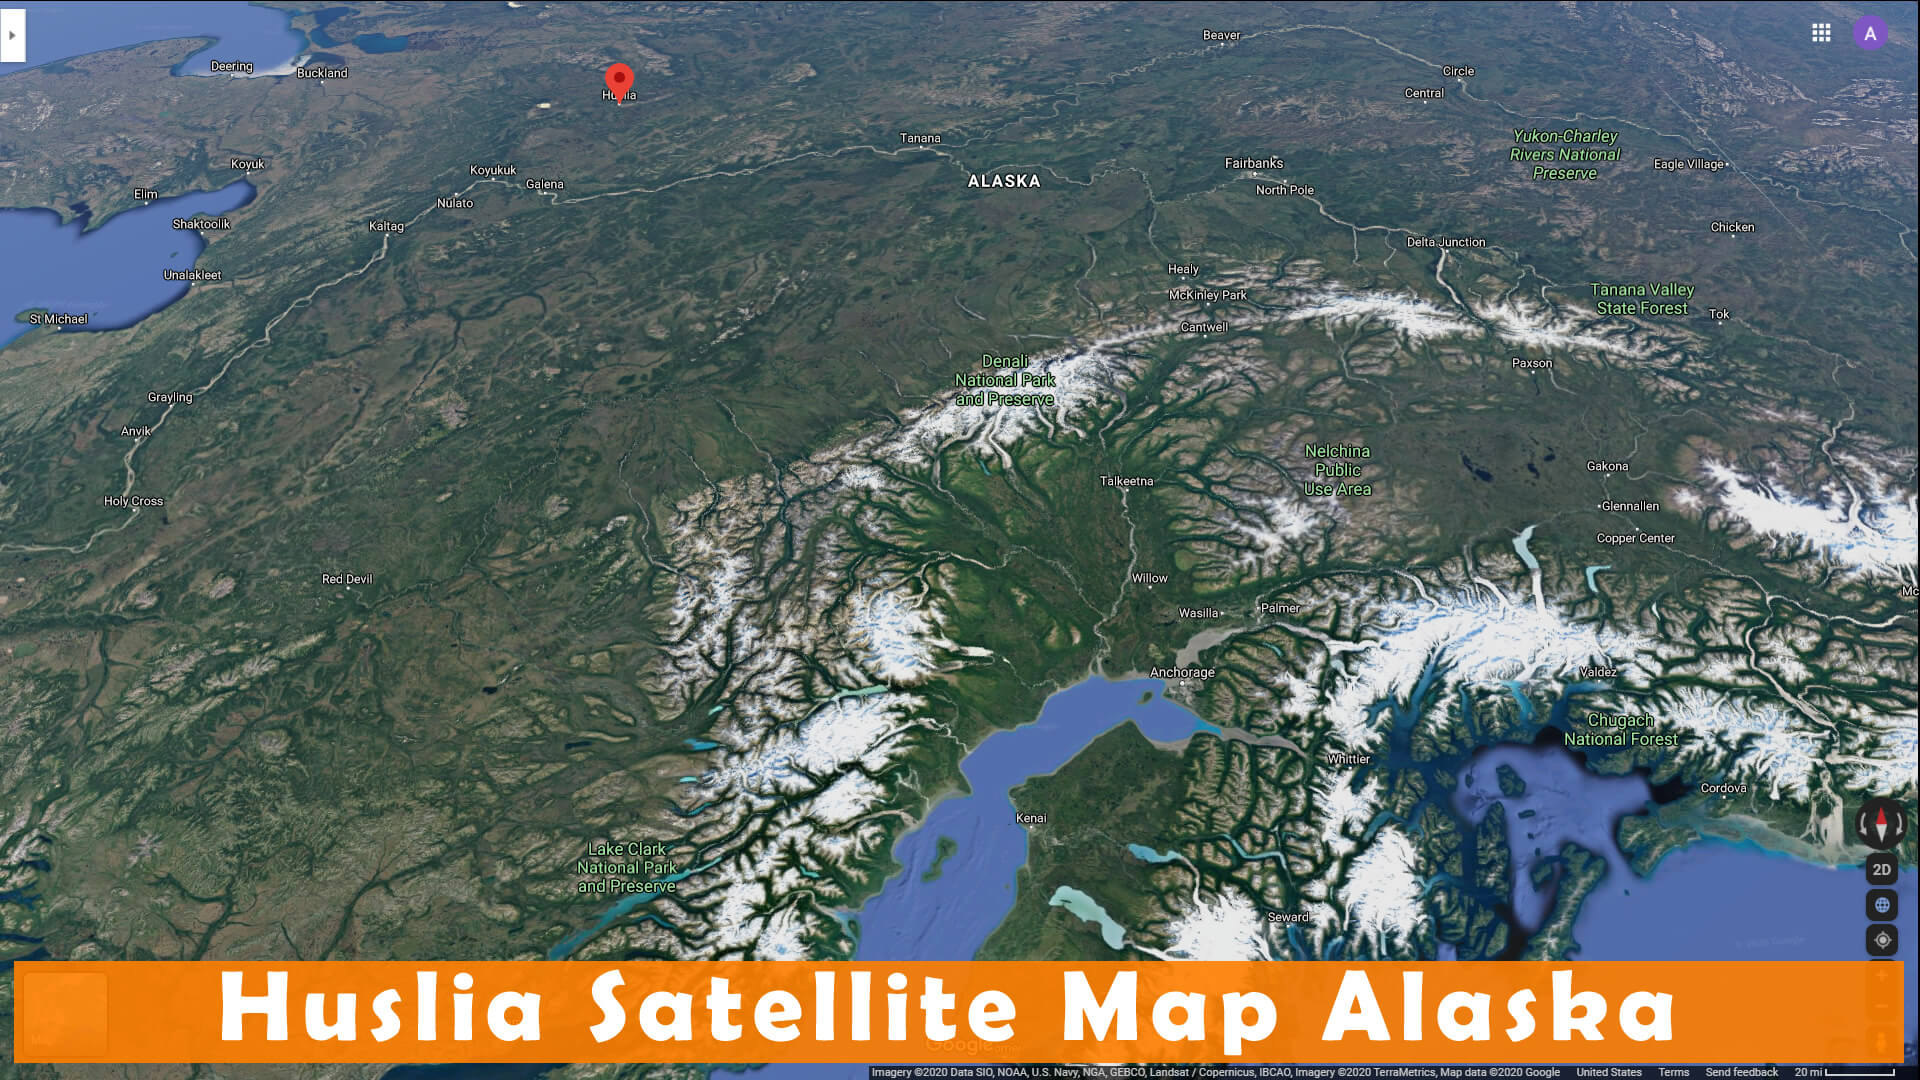 Huslia Satellite Map Alaska